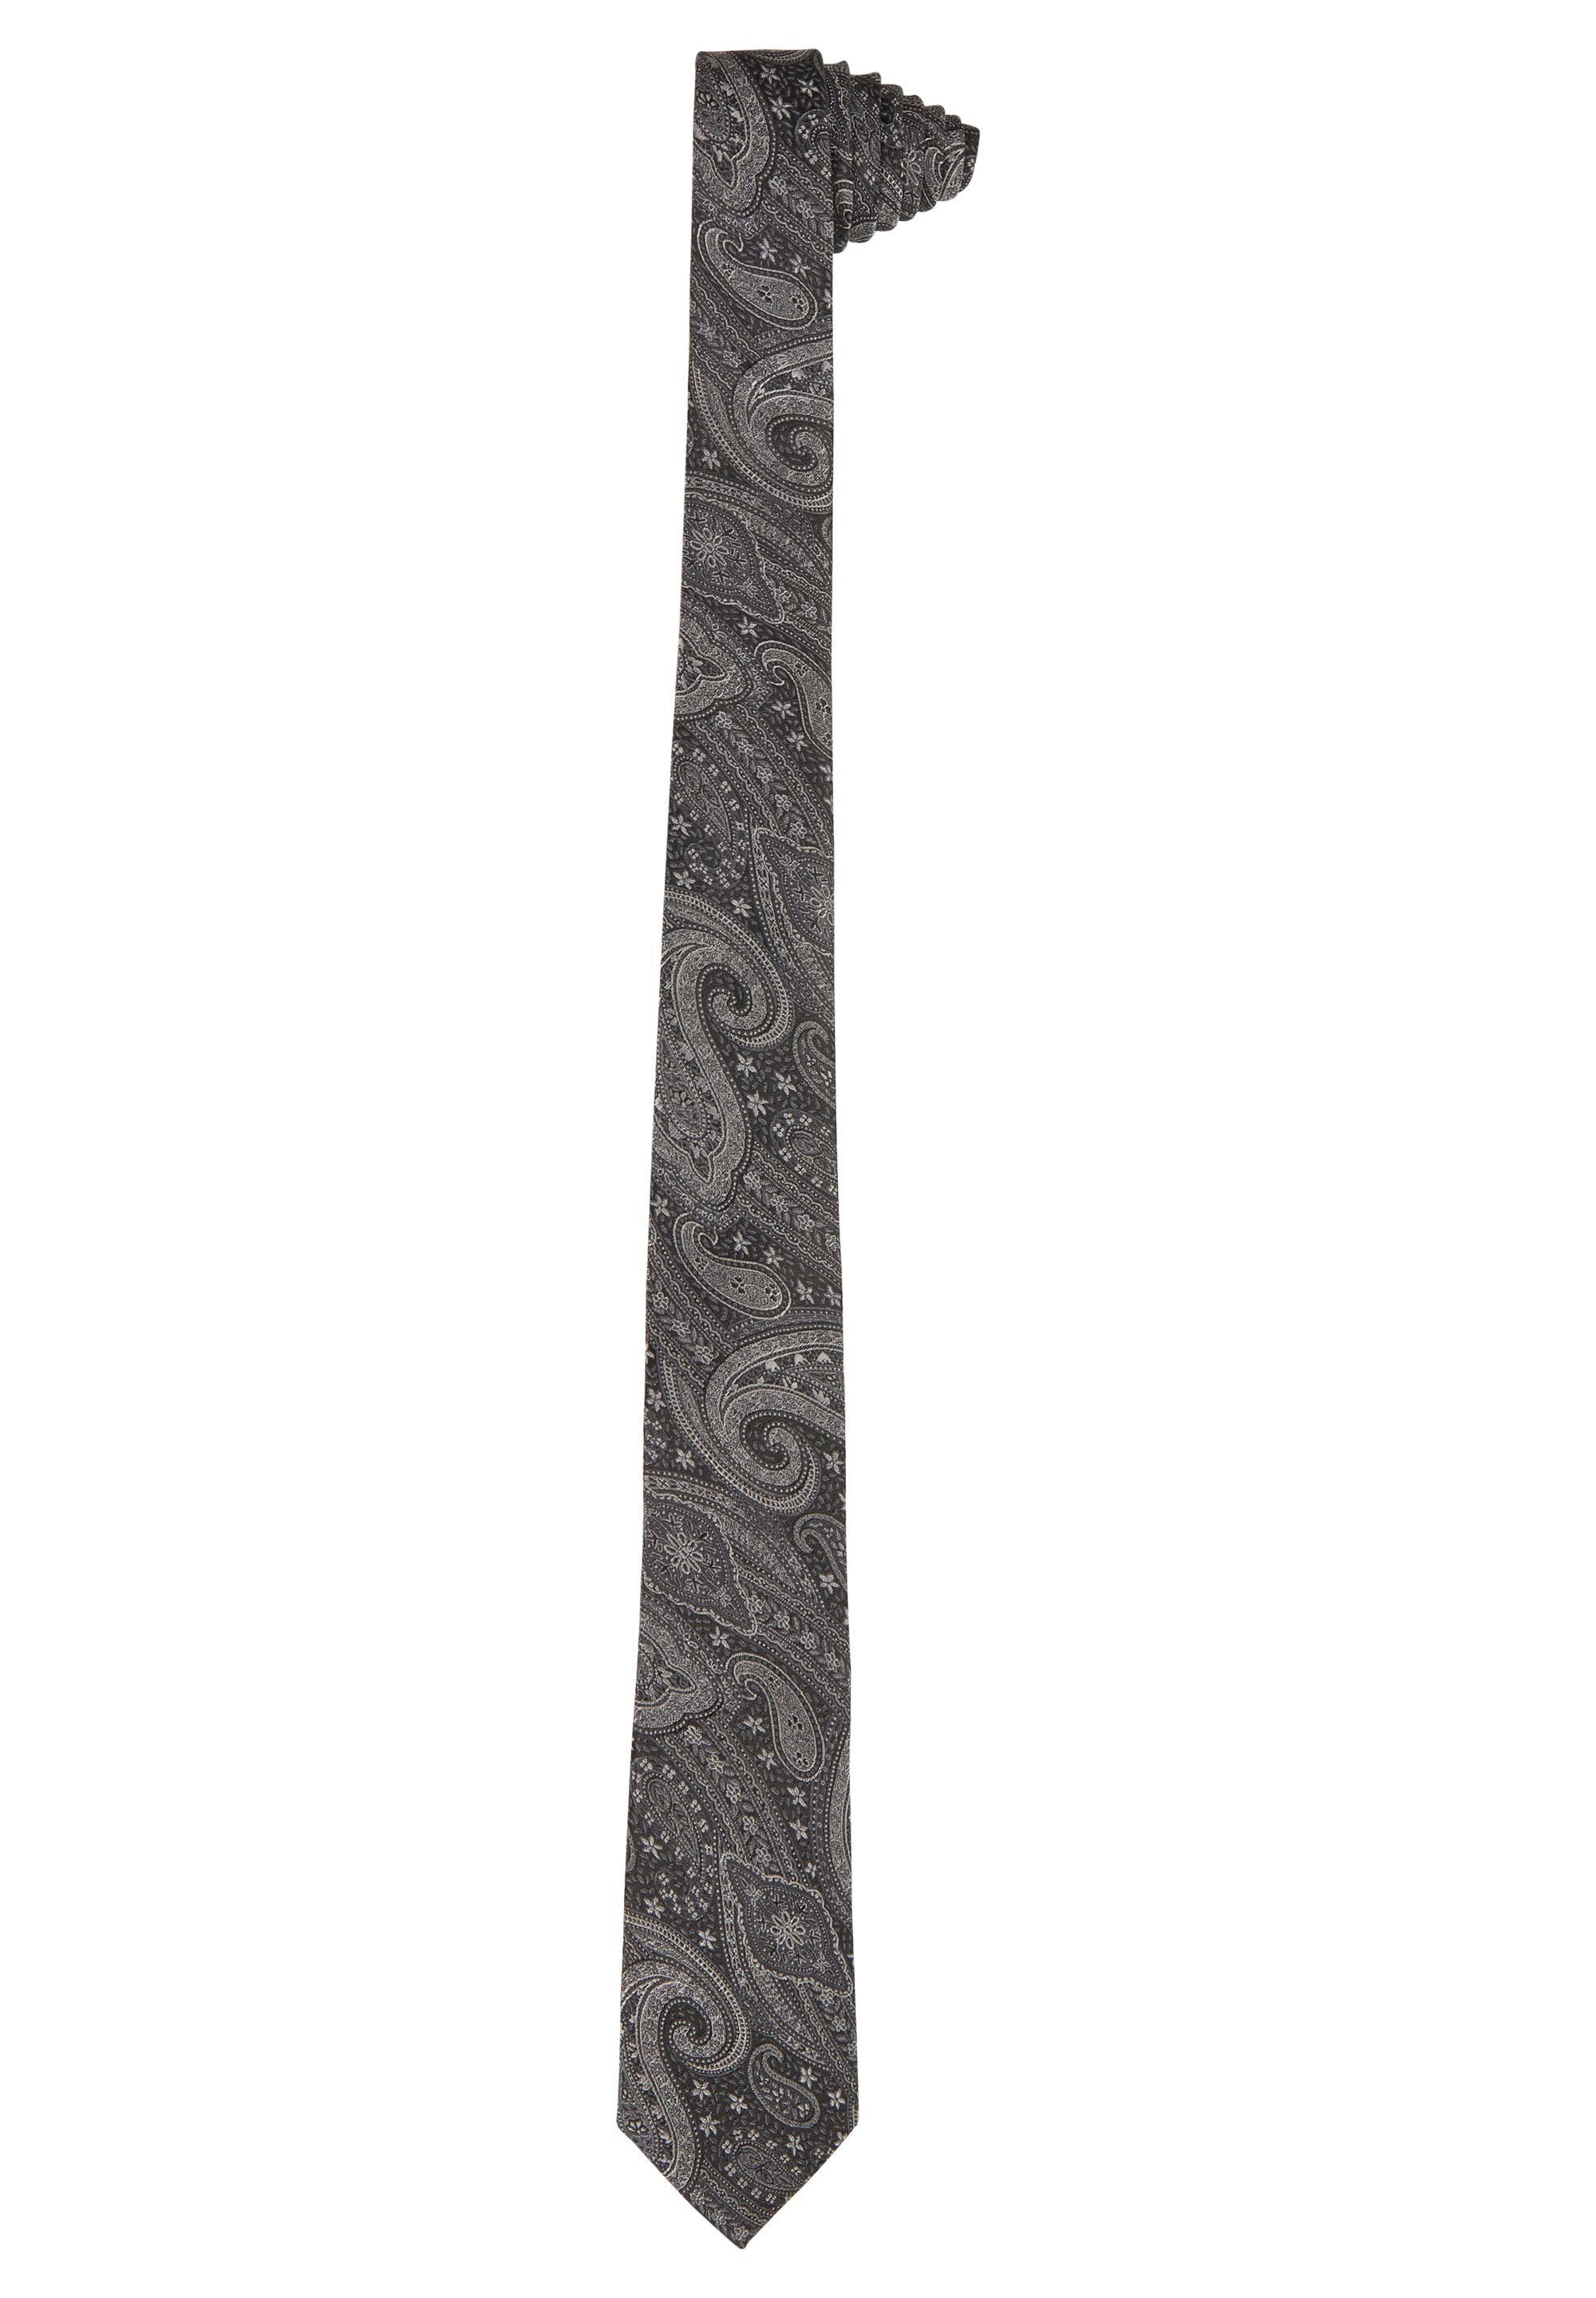 HECHTER Paisley-Muster Krawatte graphite PARIS mit